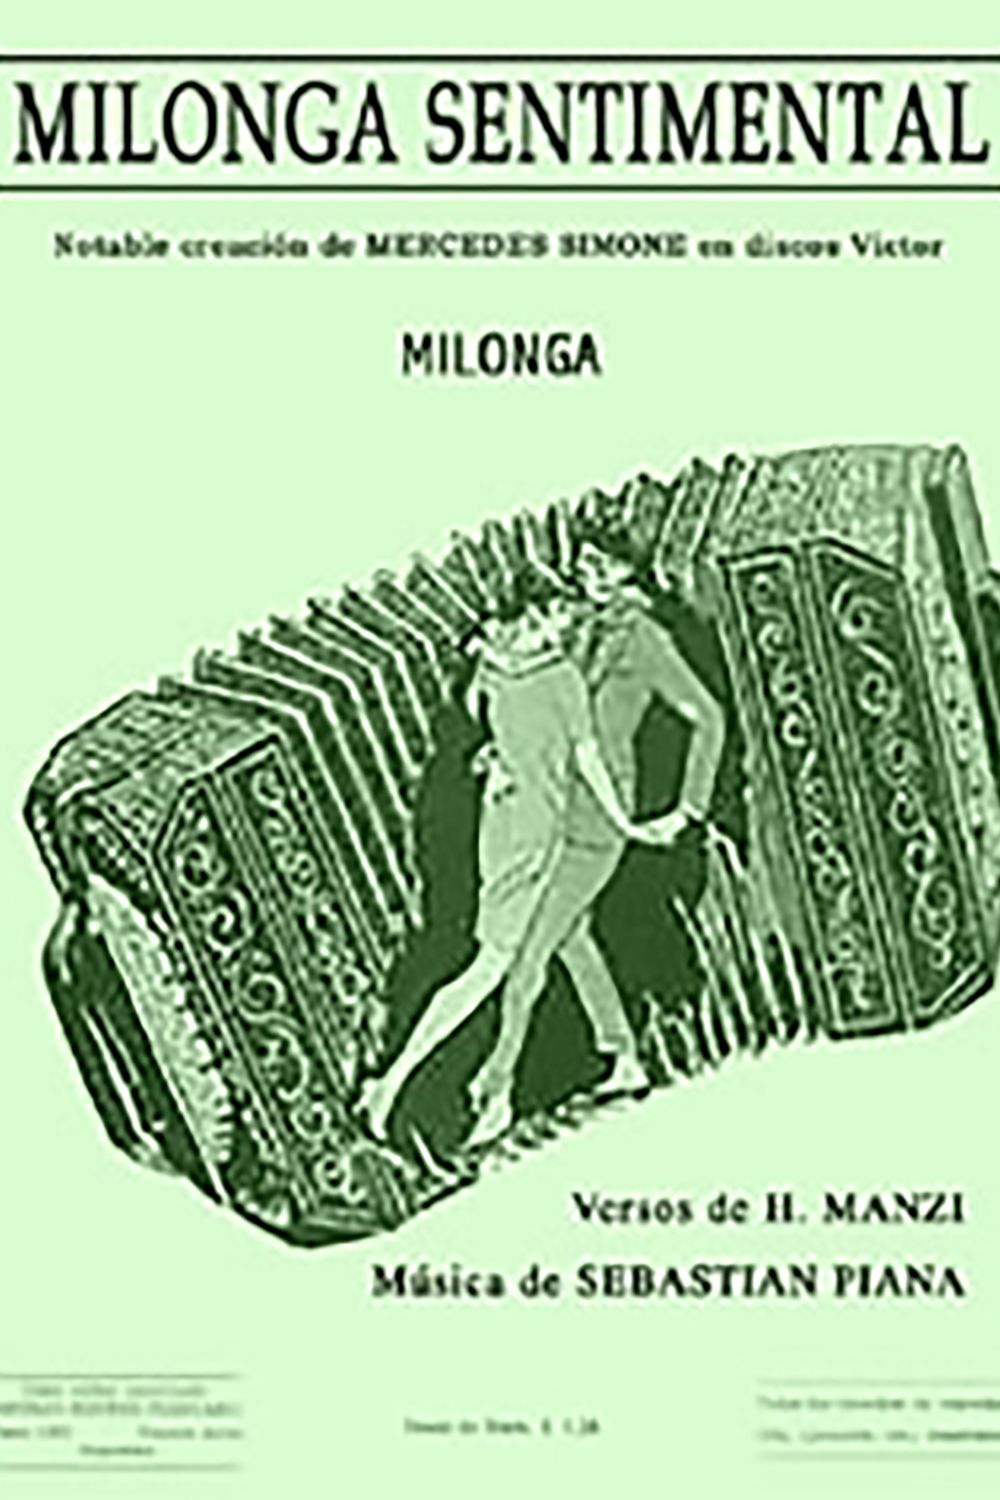 "Milonga sentimental", Argentine Tango music sheet cover.